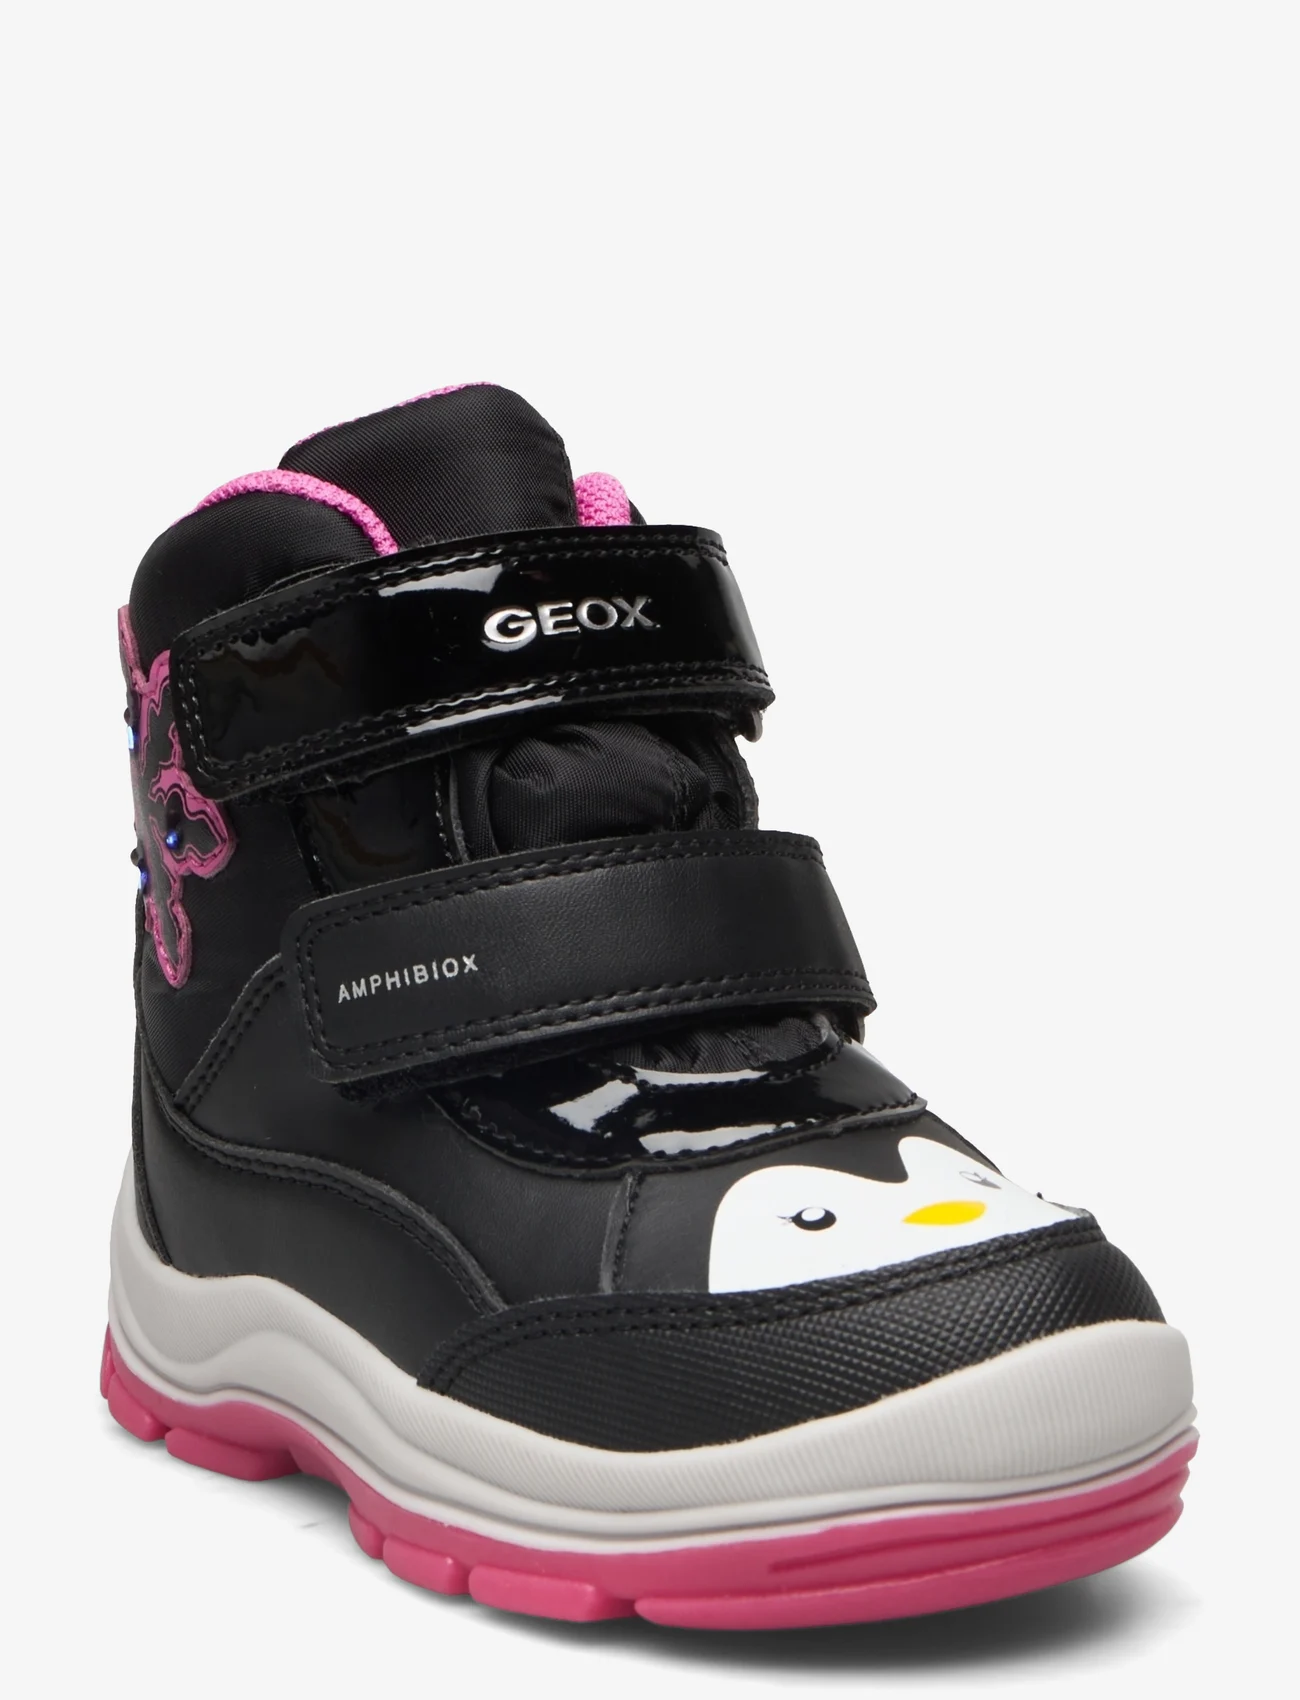 GEOX - B FLANFIL GIRL B ABX - kinder - black/pink - 0